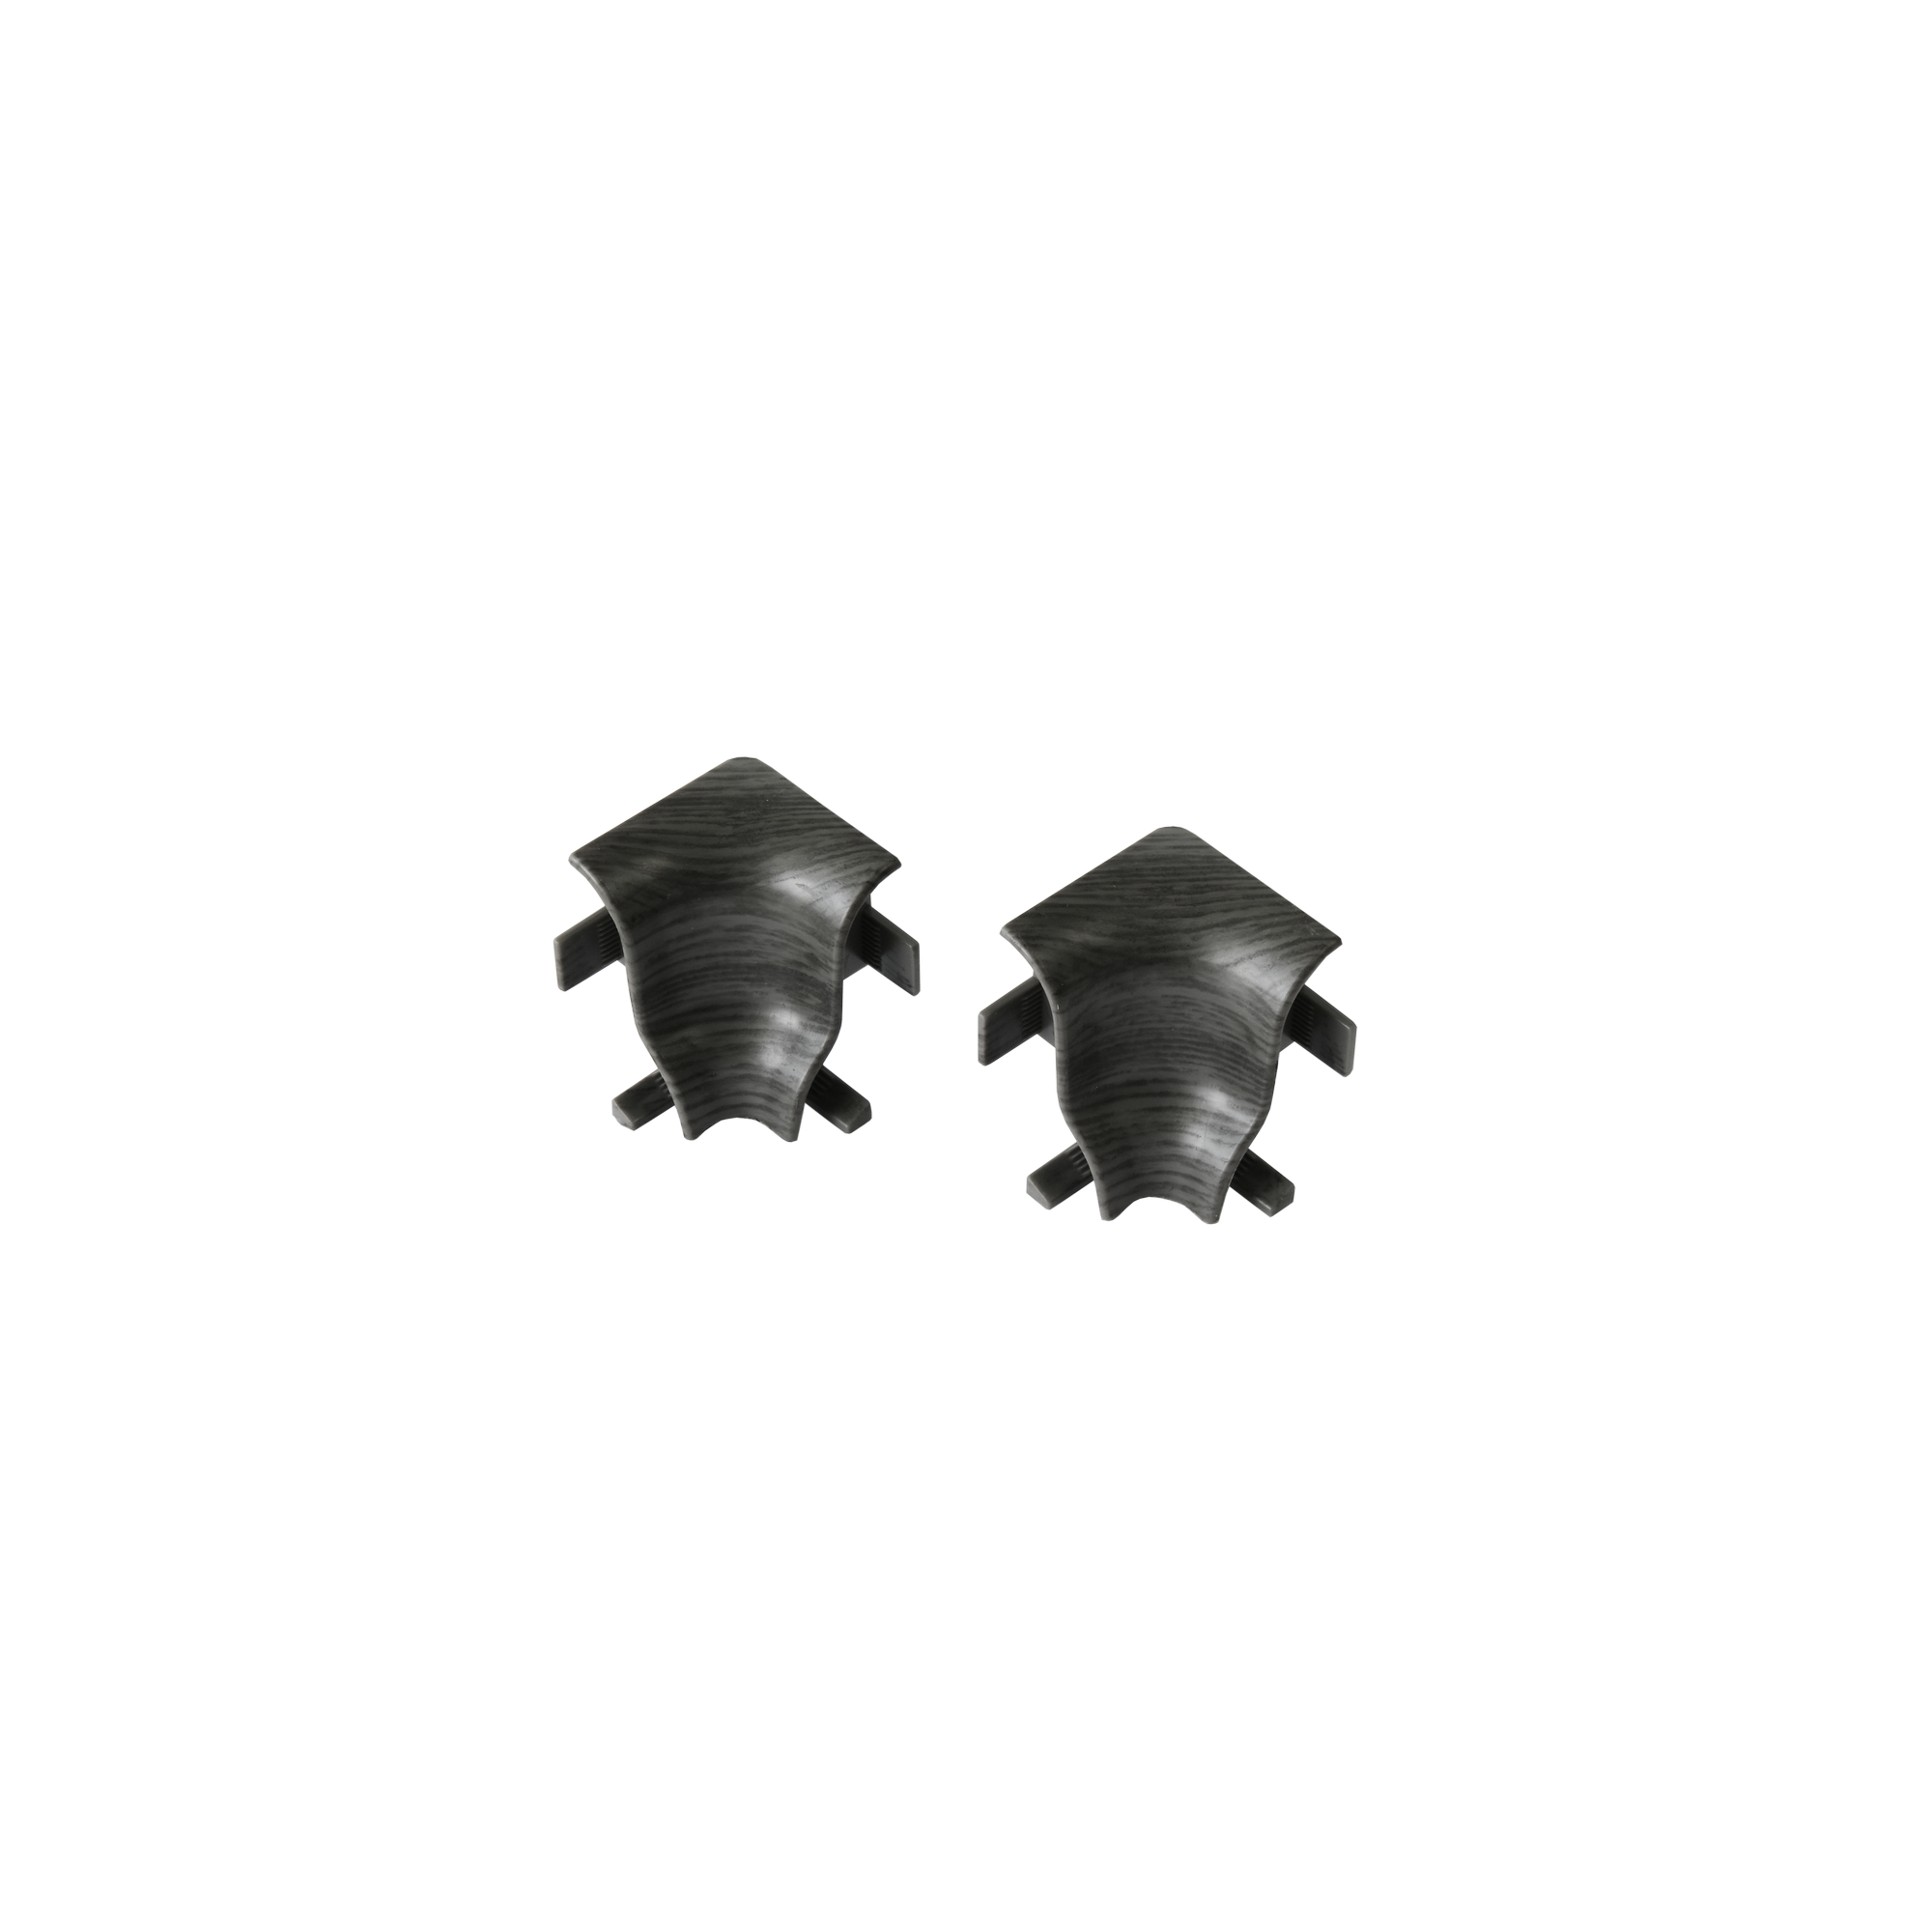 Innenecke 'Tortuna' geschwungen grau-schwarz, 2 Stück + product picture